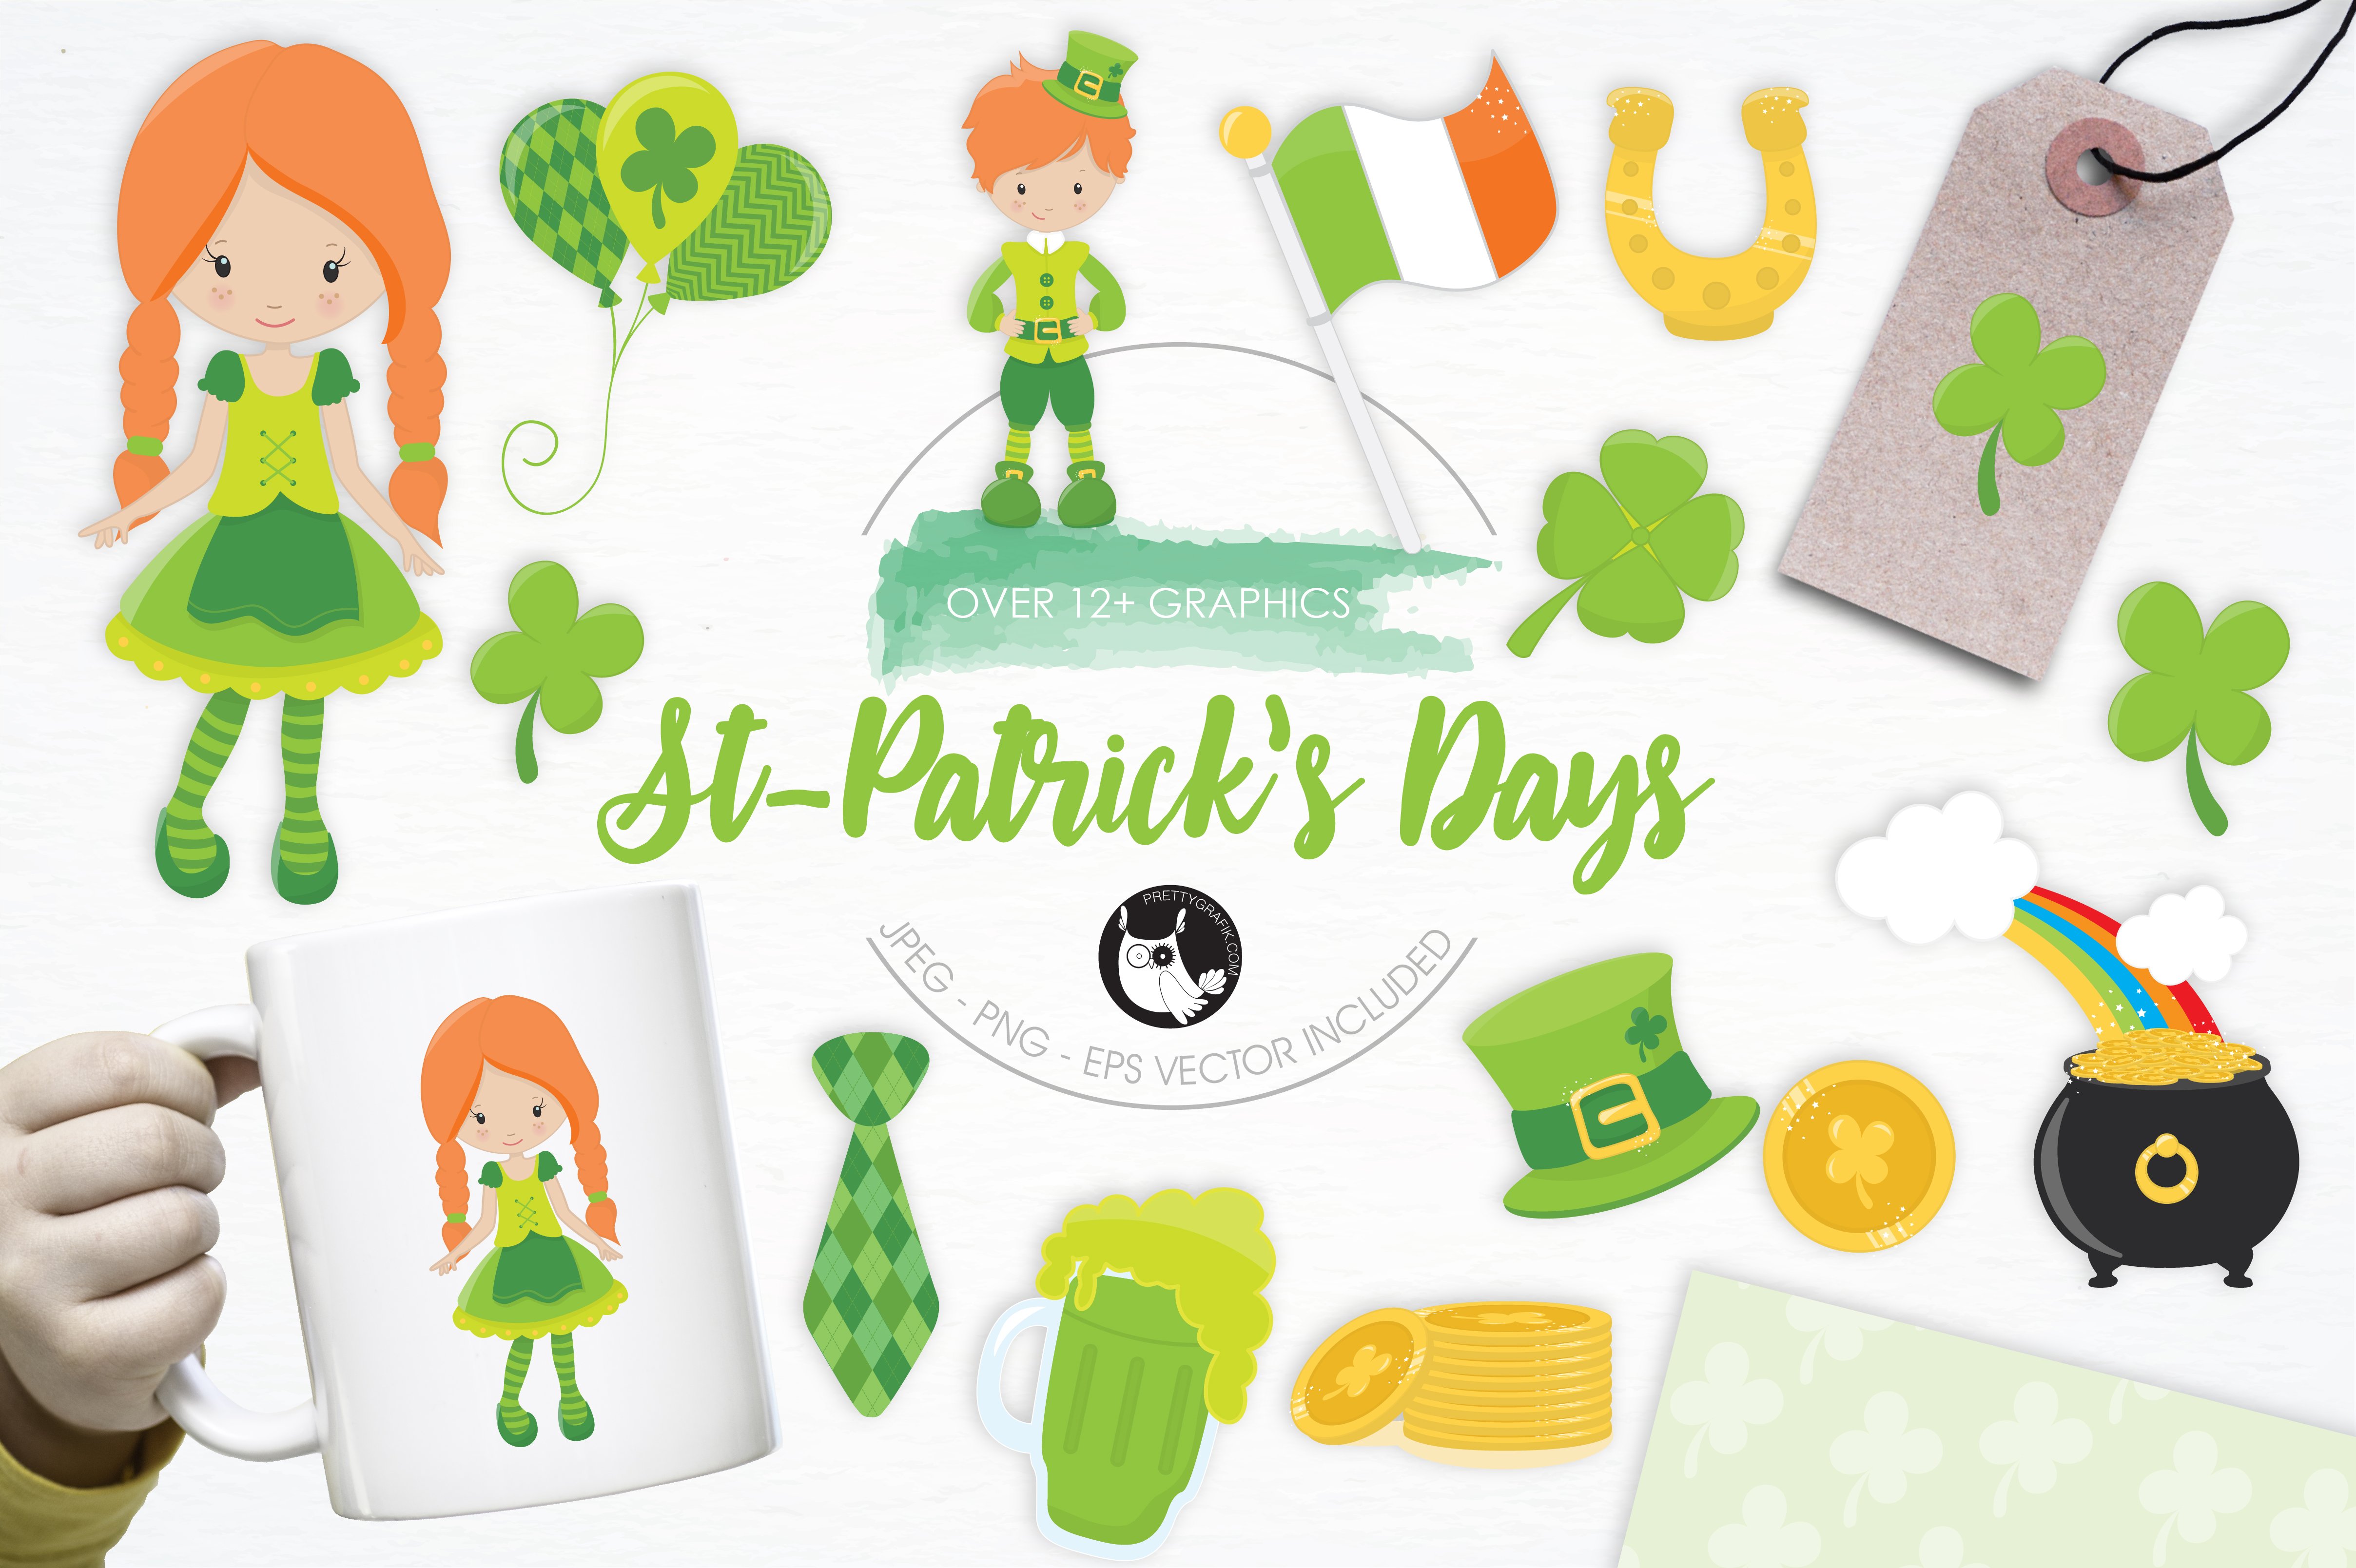 St Patrick Days illustration pack - Vector Image